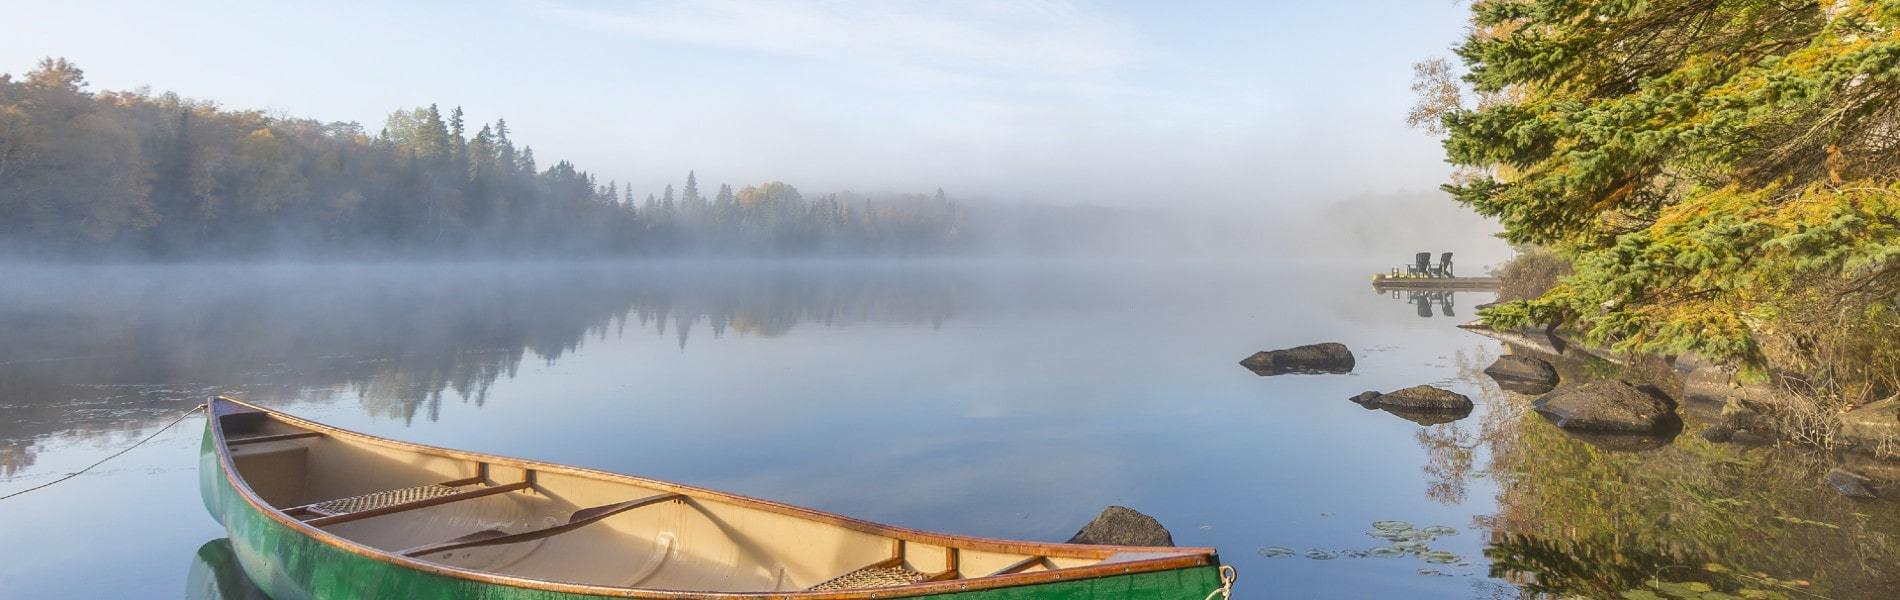 canoe floating on a lake in Haliburton, Ontario's Muskoka Lakes Region